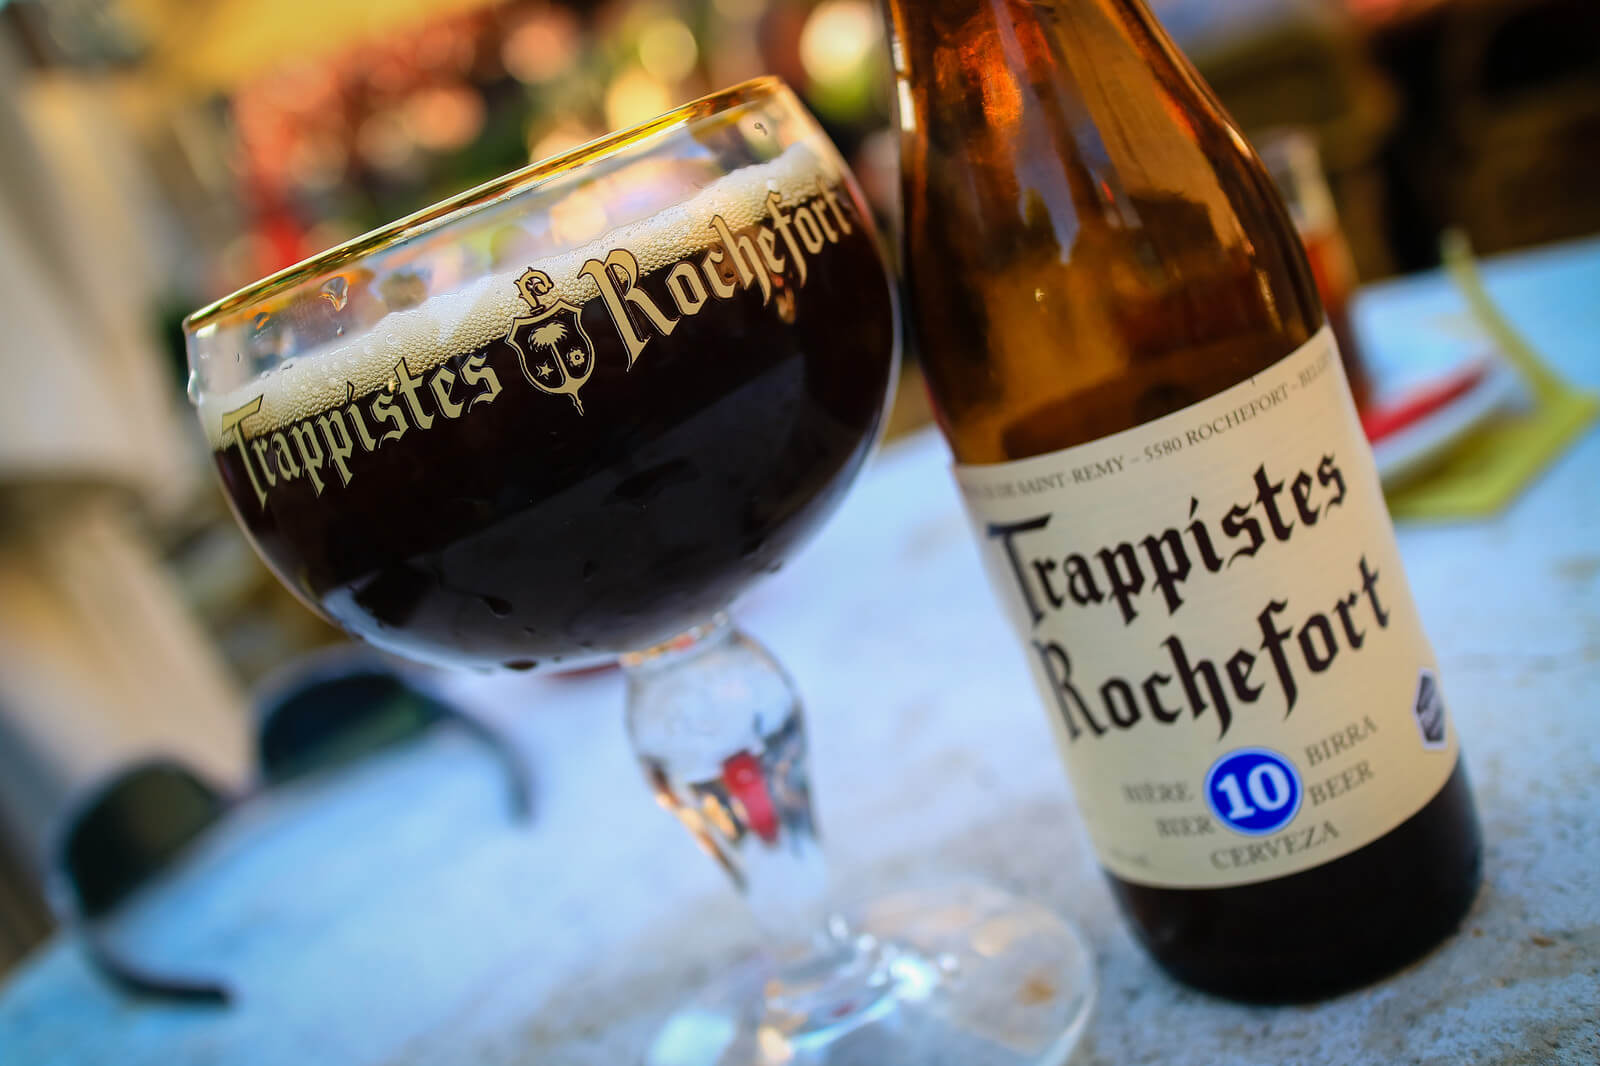 Trappistes Rochefort